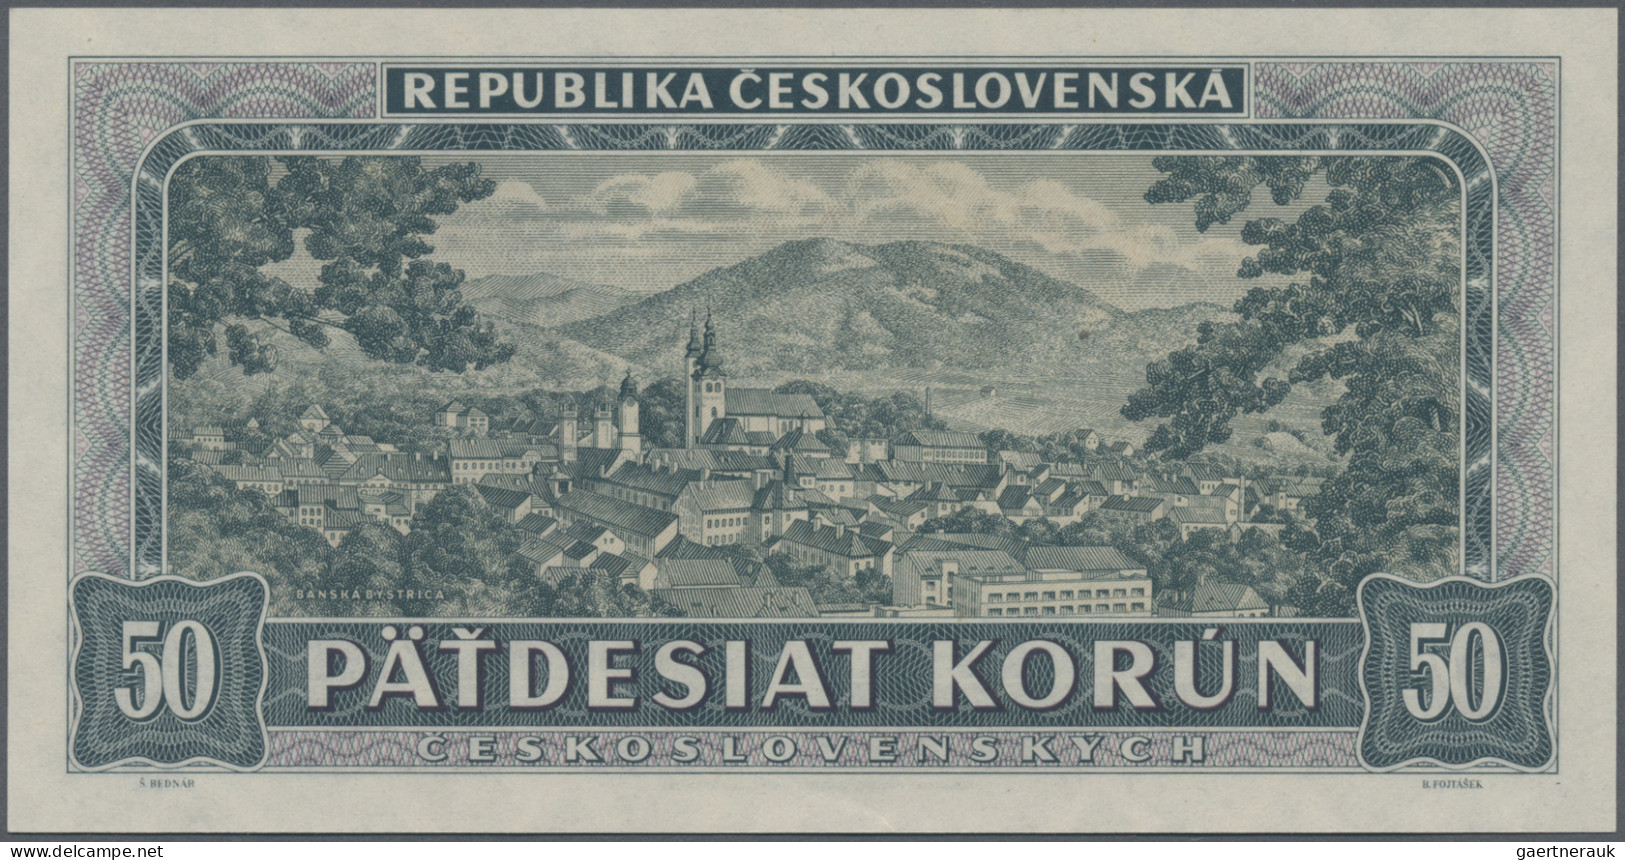 Czechoslovakia: REPUBLIKA ČESKOSLOVENSKÁ, lot with 31 banknotes, series 1945-195